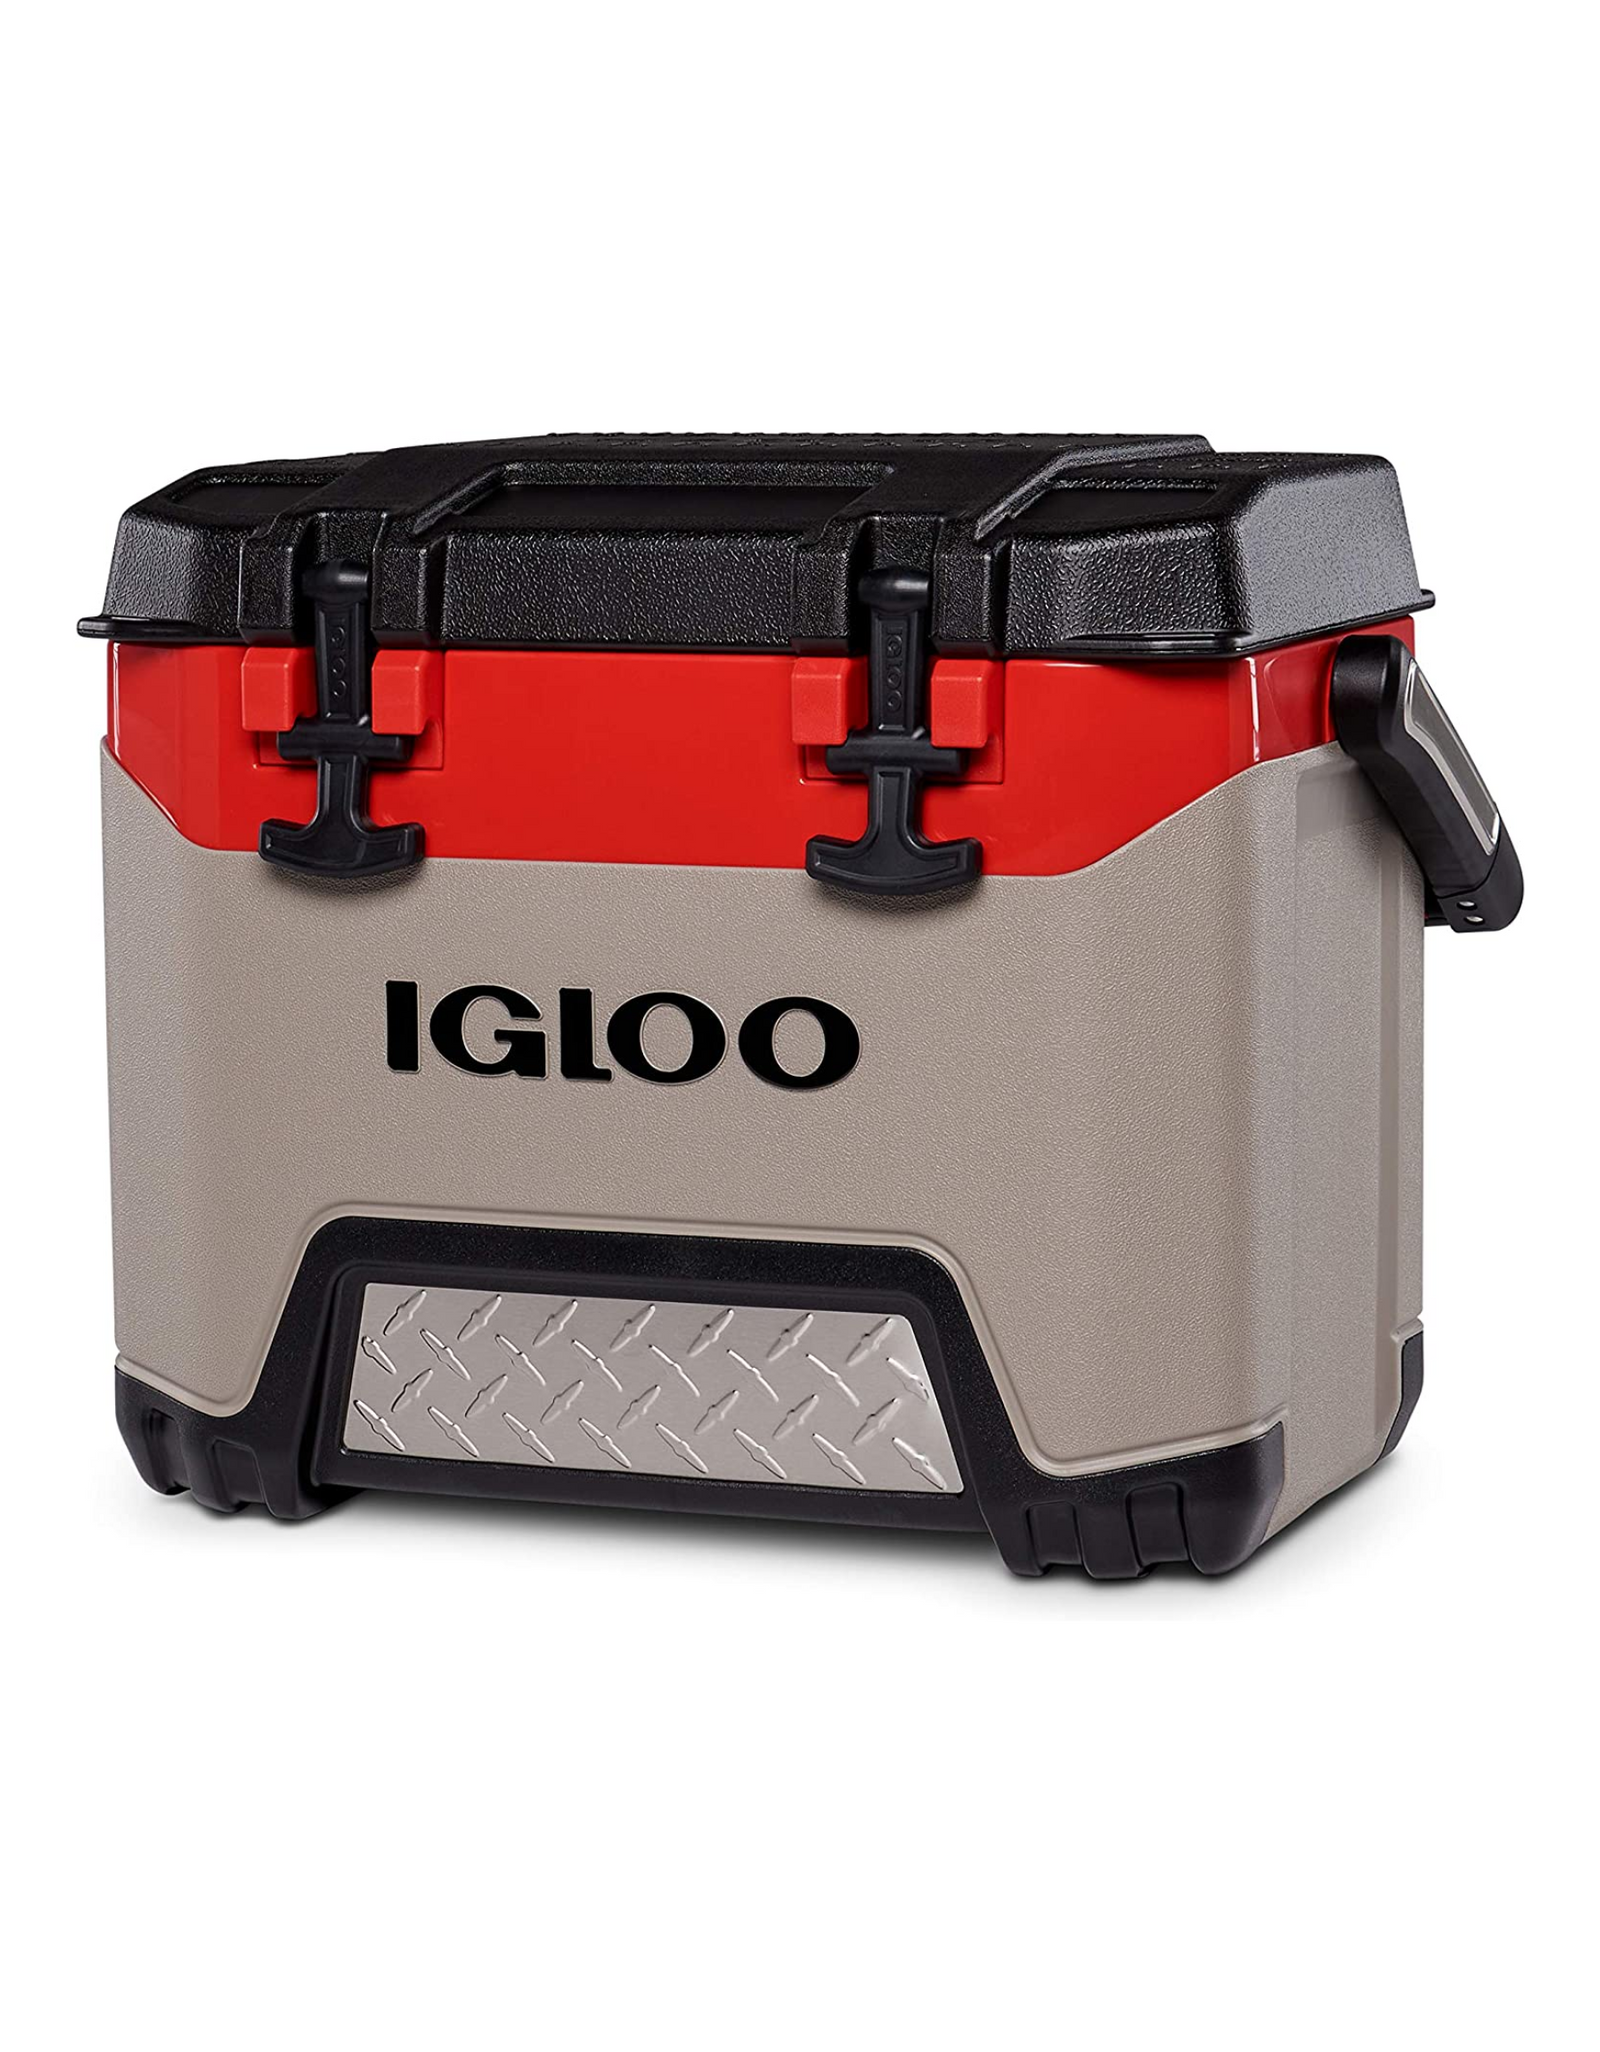 Igloo BMX 25 Quart Cooler with Cool Riser Technology, Sandstone/Red